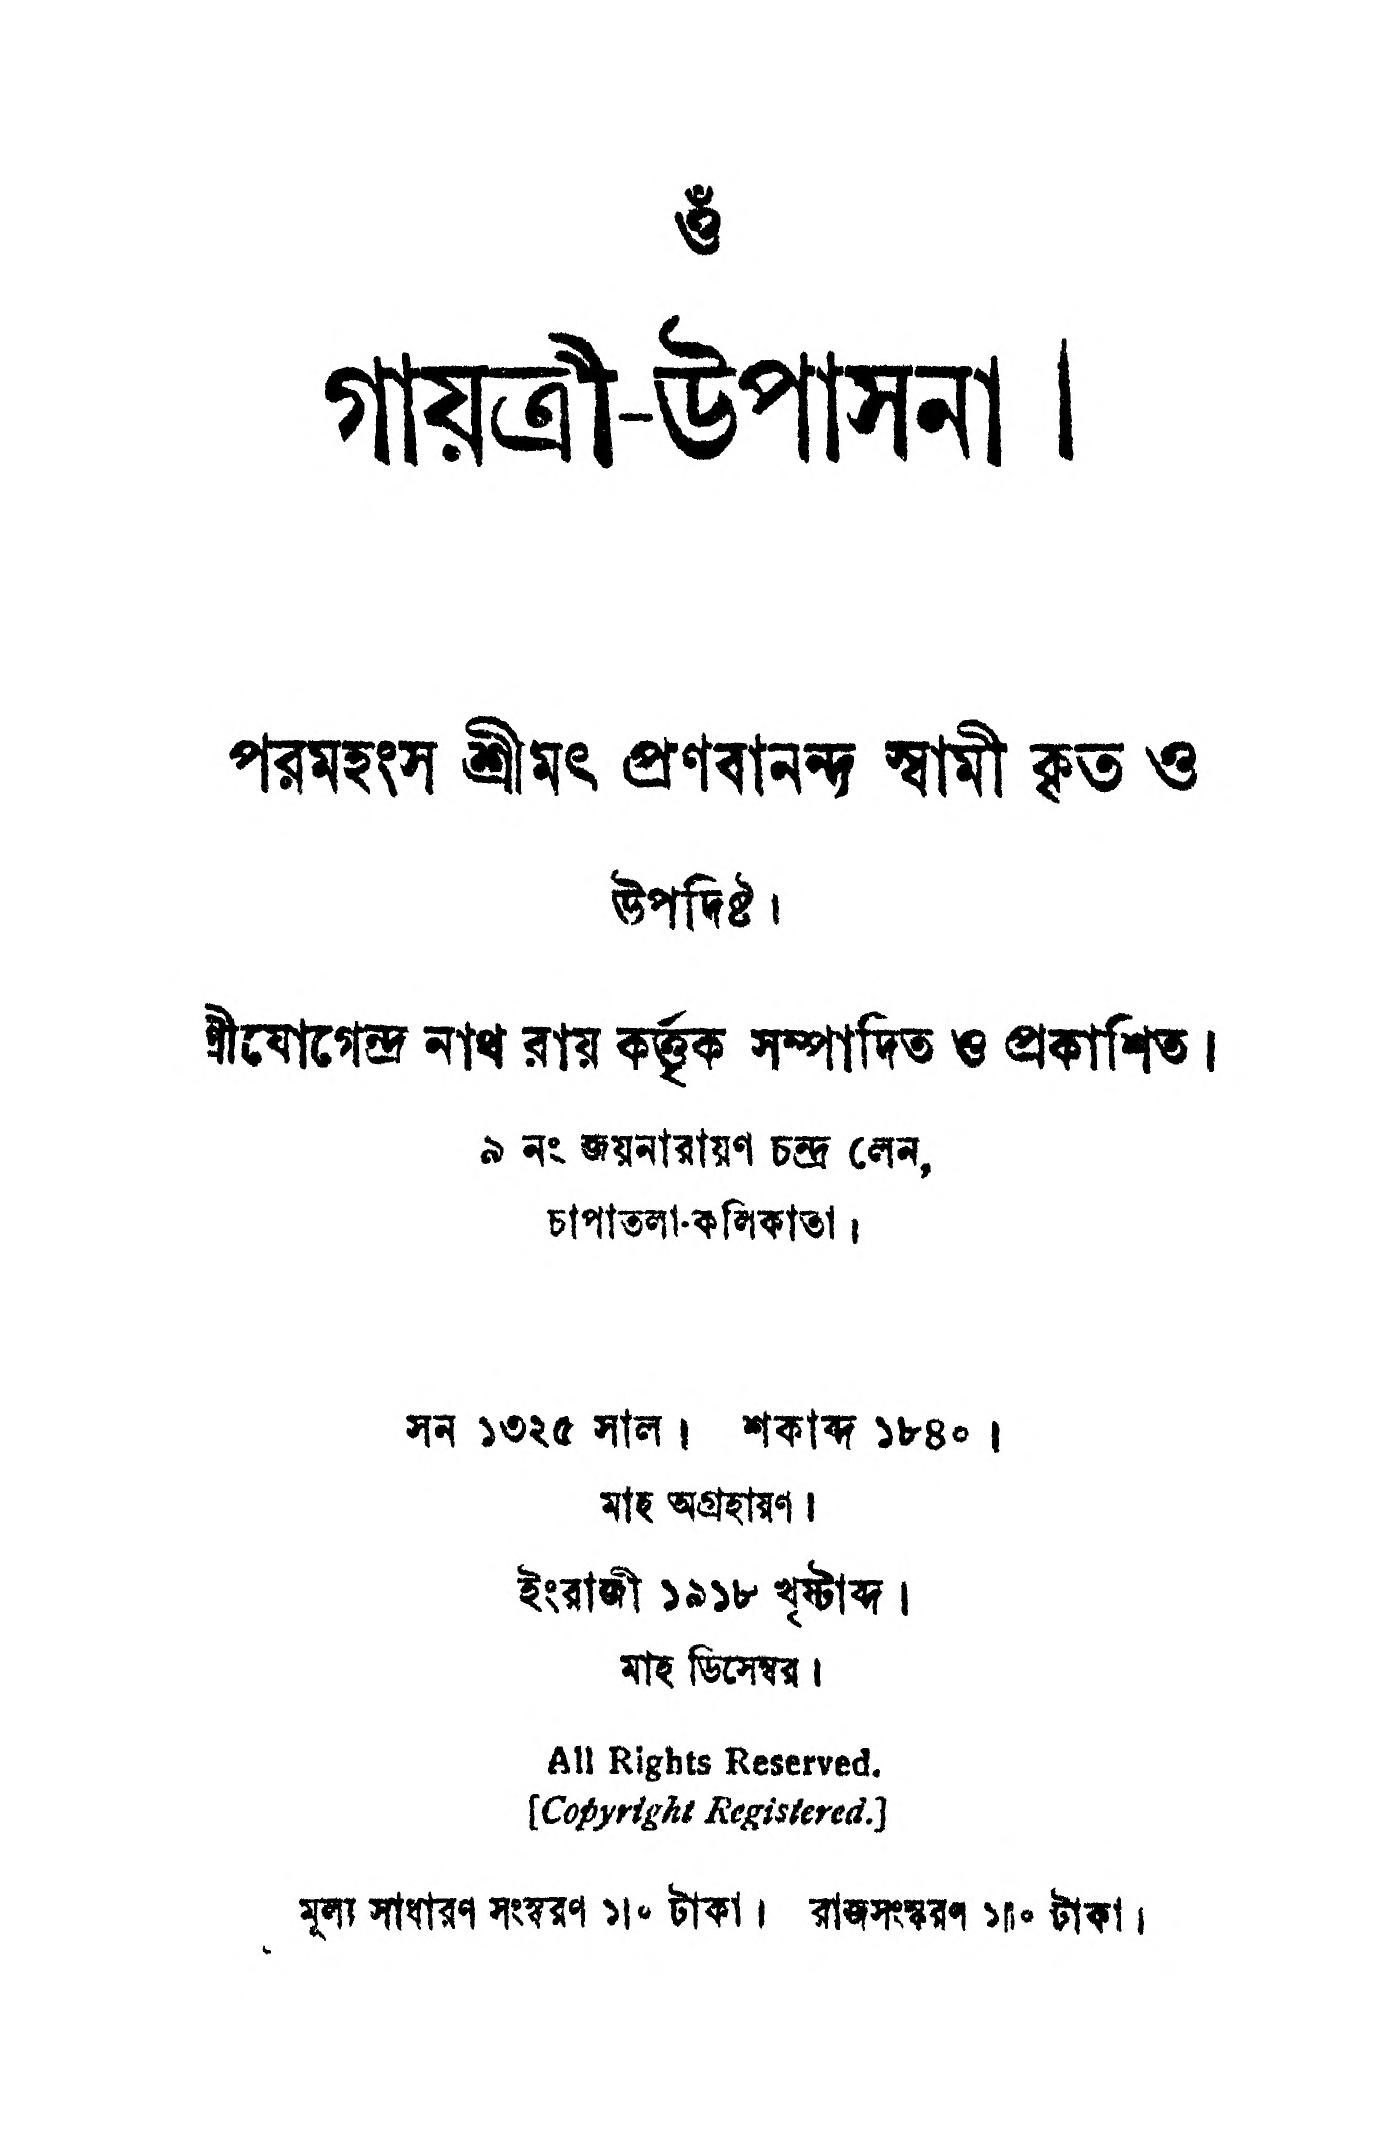 Bangla gayatri mantra